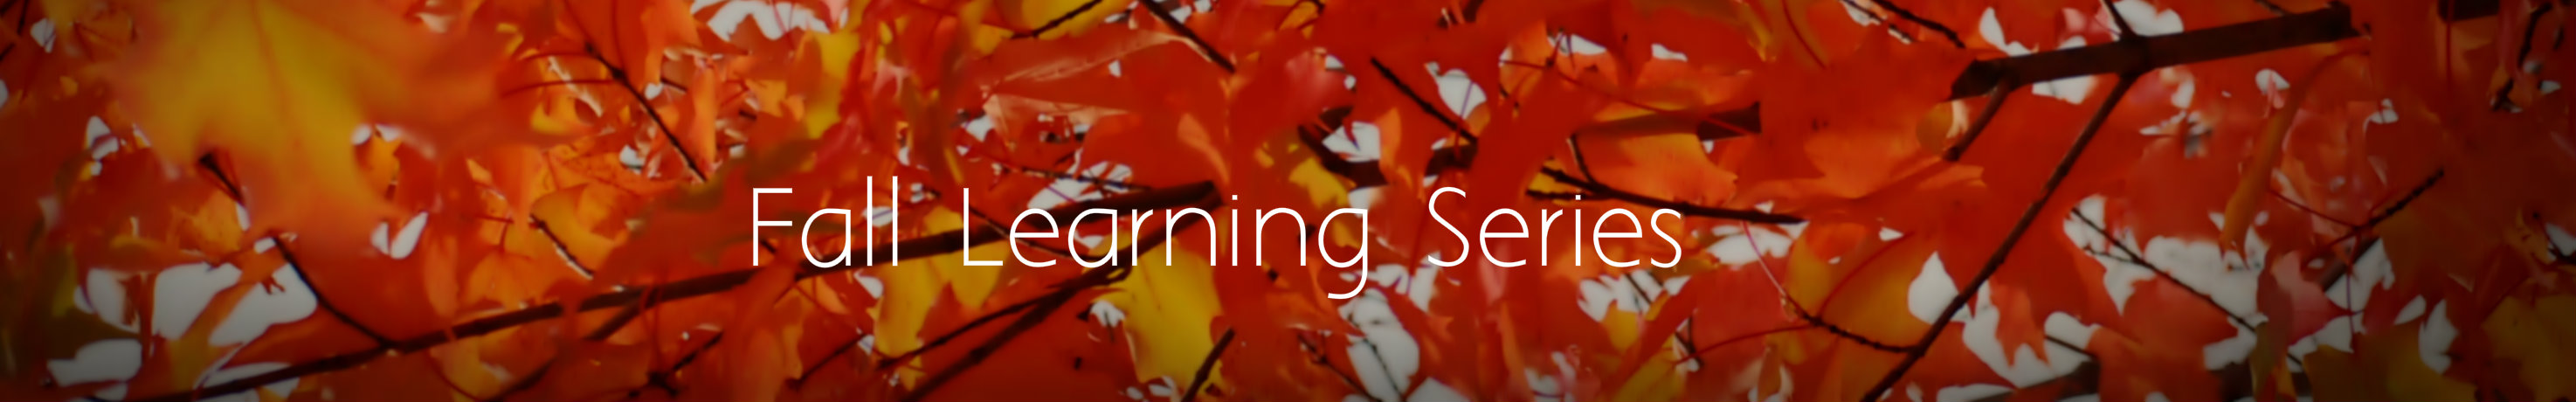 Fall_Learning_Series.jpg